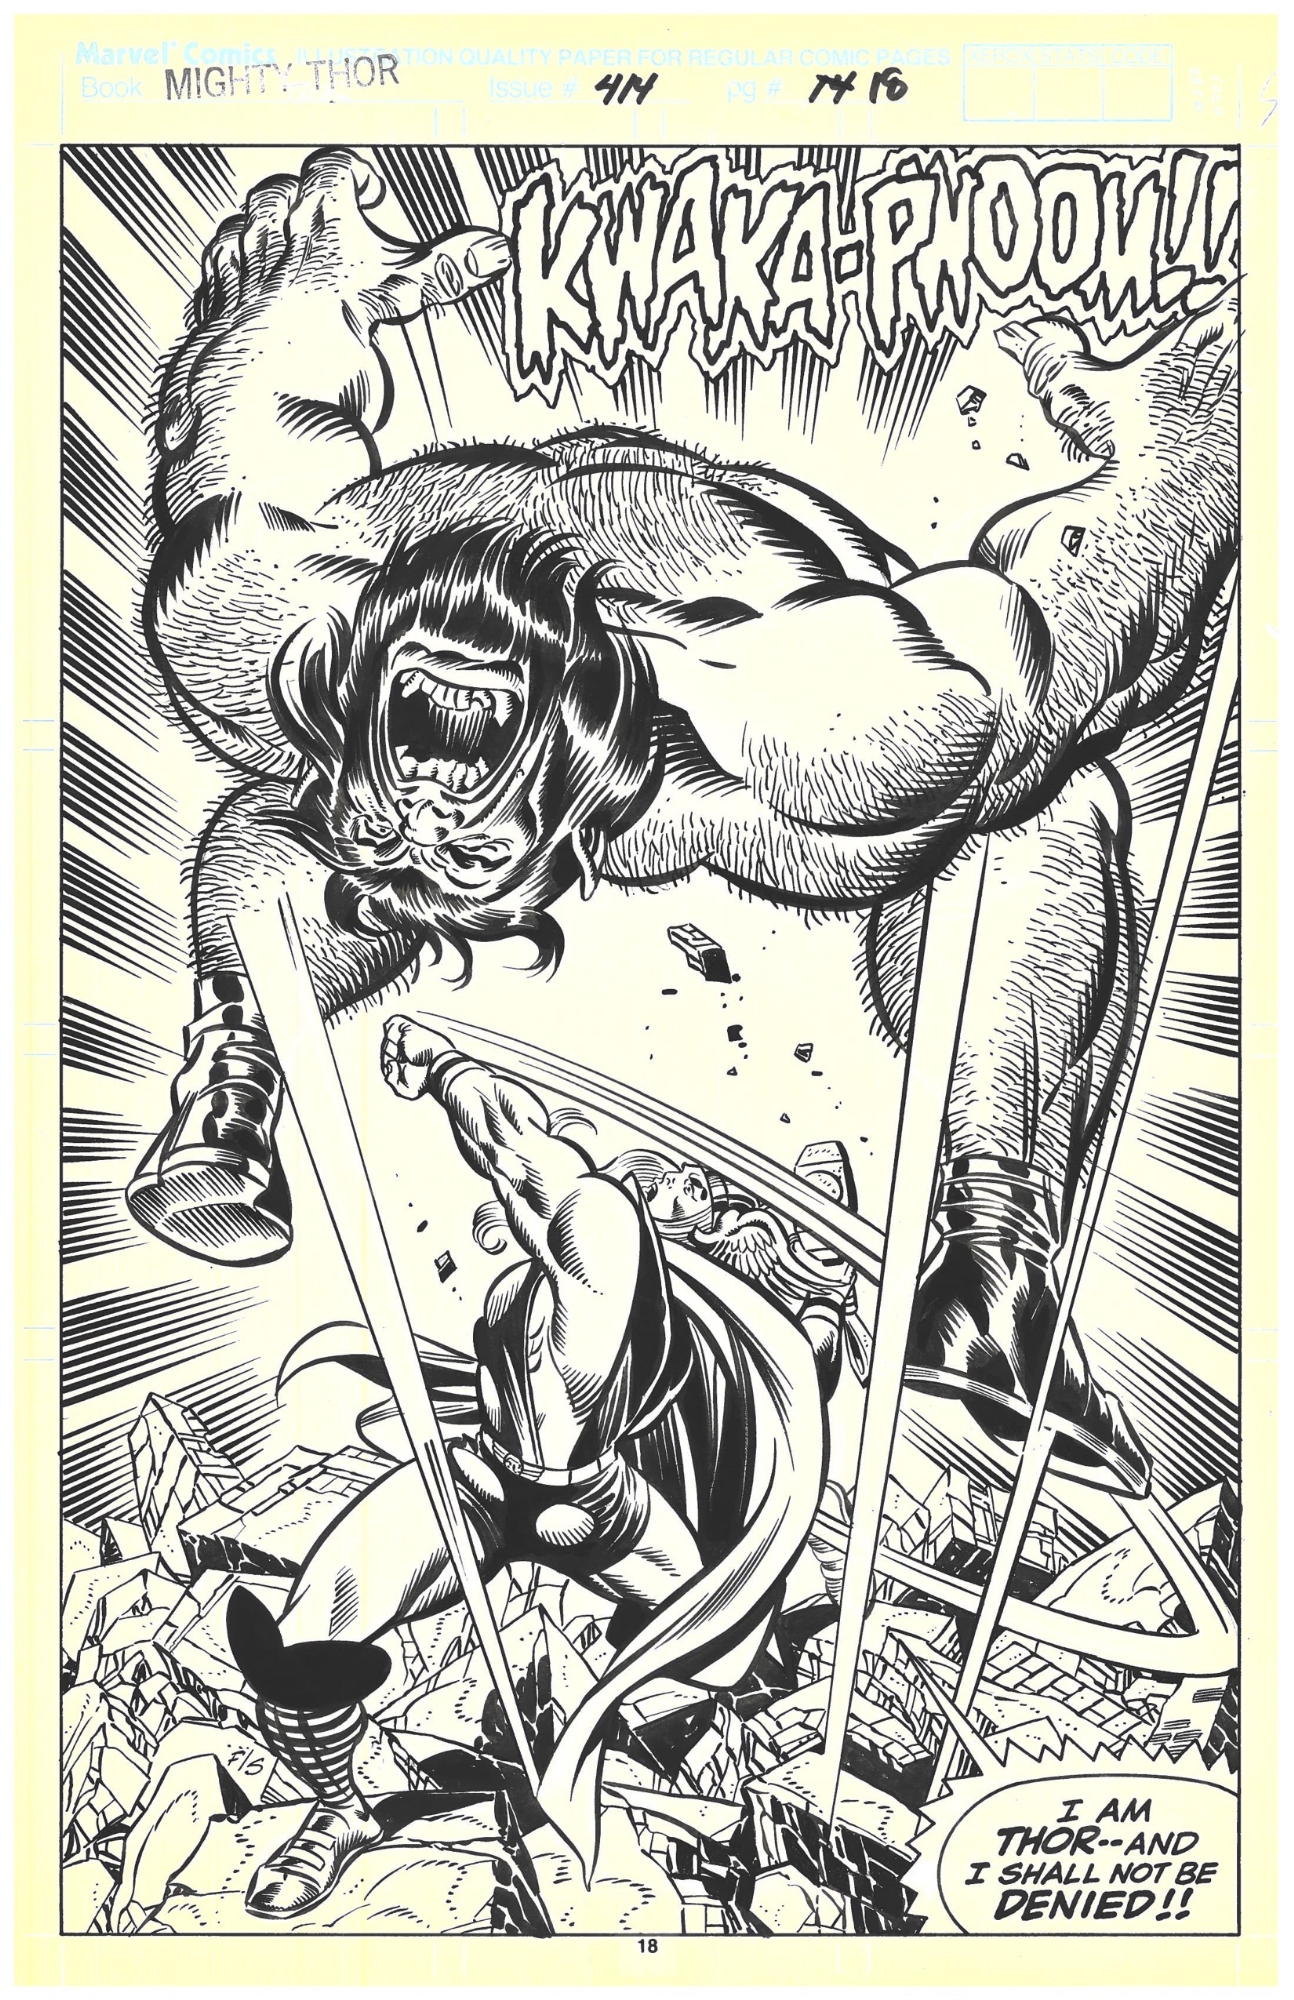 The Mighty Thor #414 February 1990 Marvel Comics